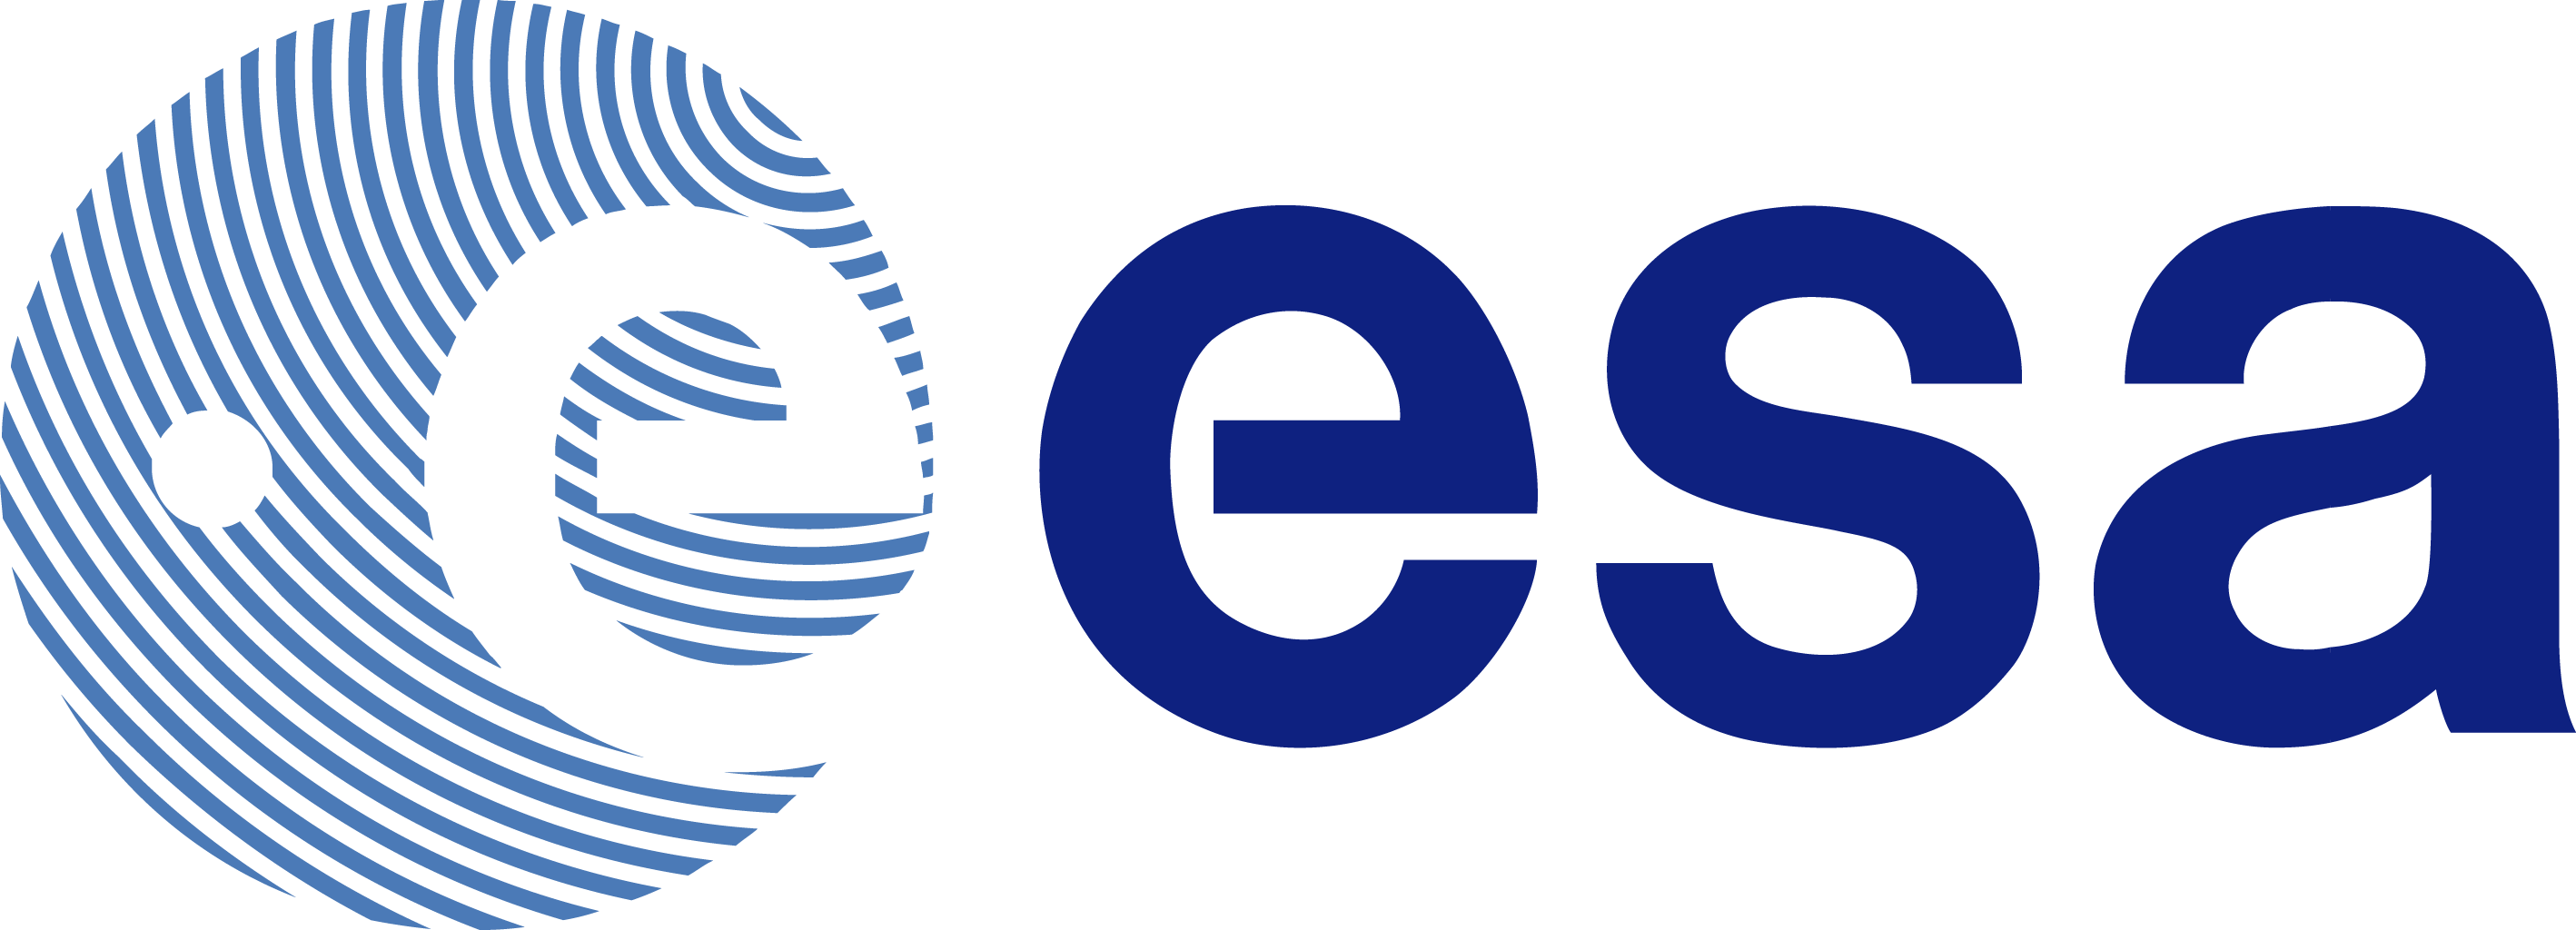 ESA - European Space Agency Logo